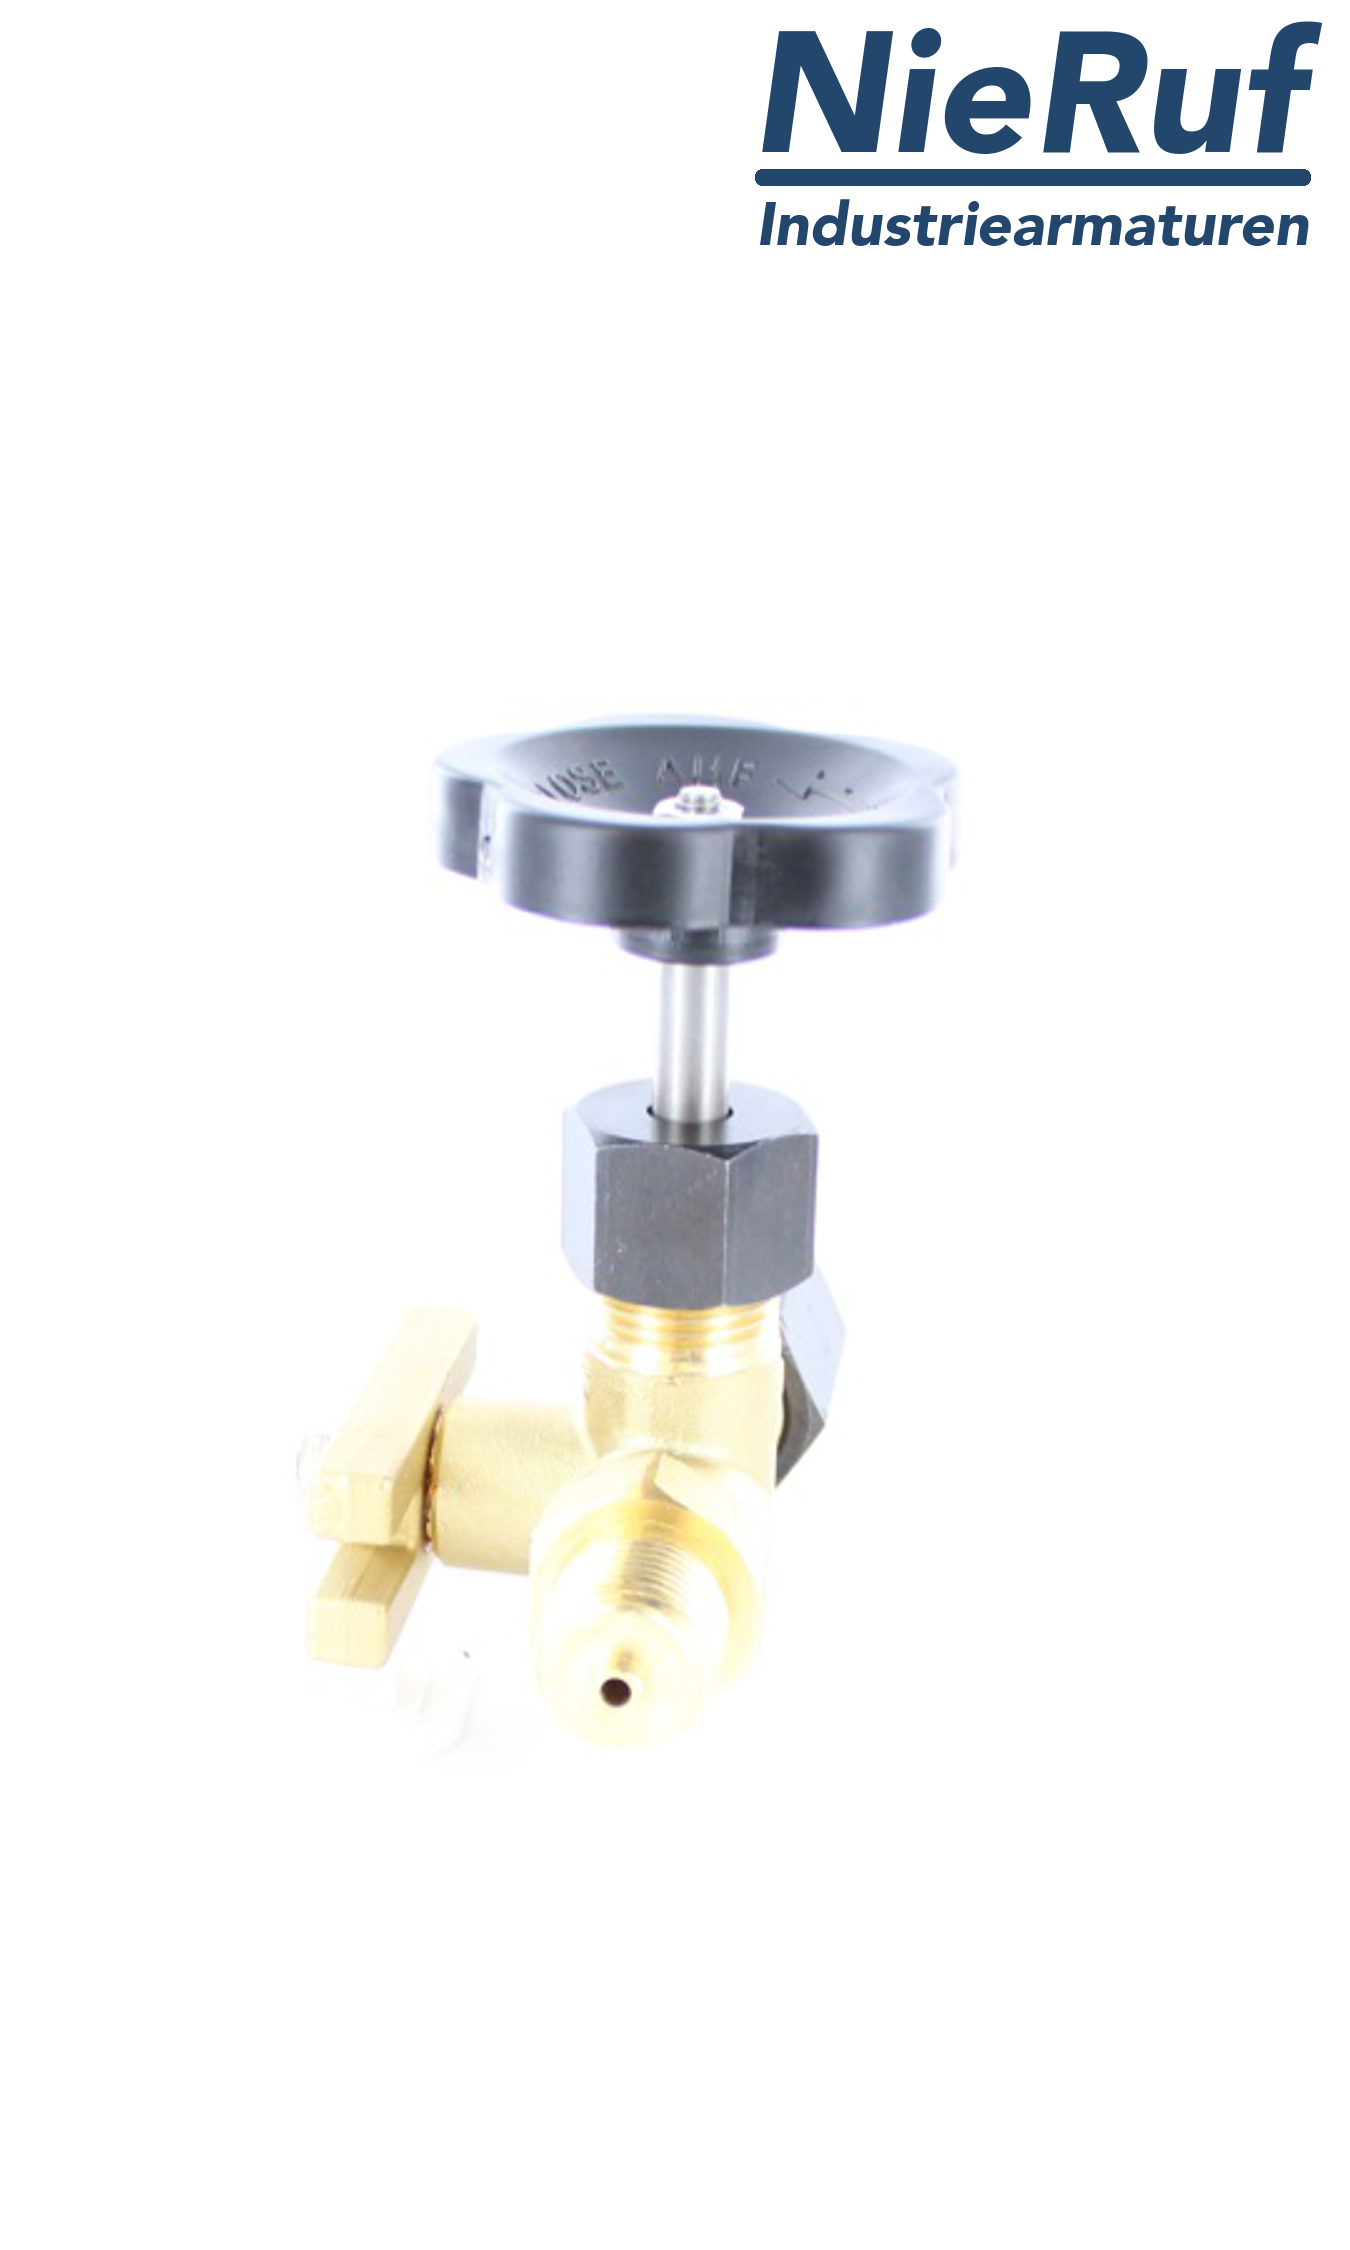 manometer gauge valves male thread x sleeve x test flange 60x25 mm DIN 16271 brass 250 bar